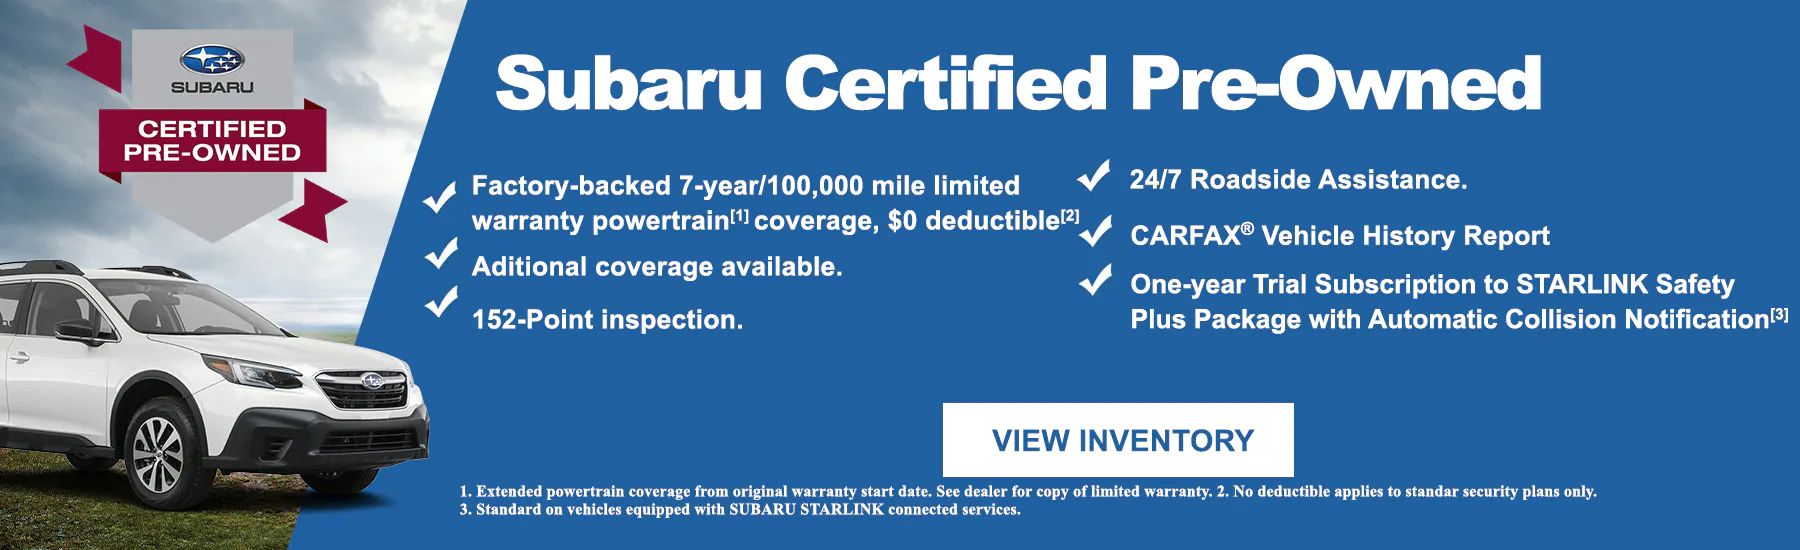 Subaru Certified Pre-Owned at Sierra Subaru of Monrovia in Monrovia, CA 